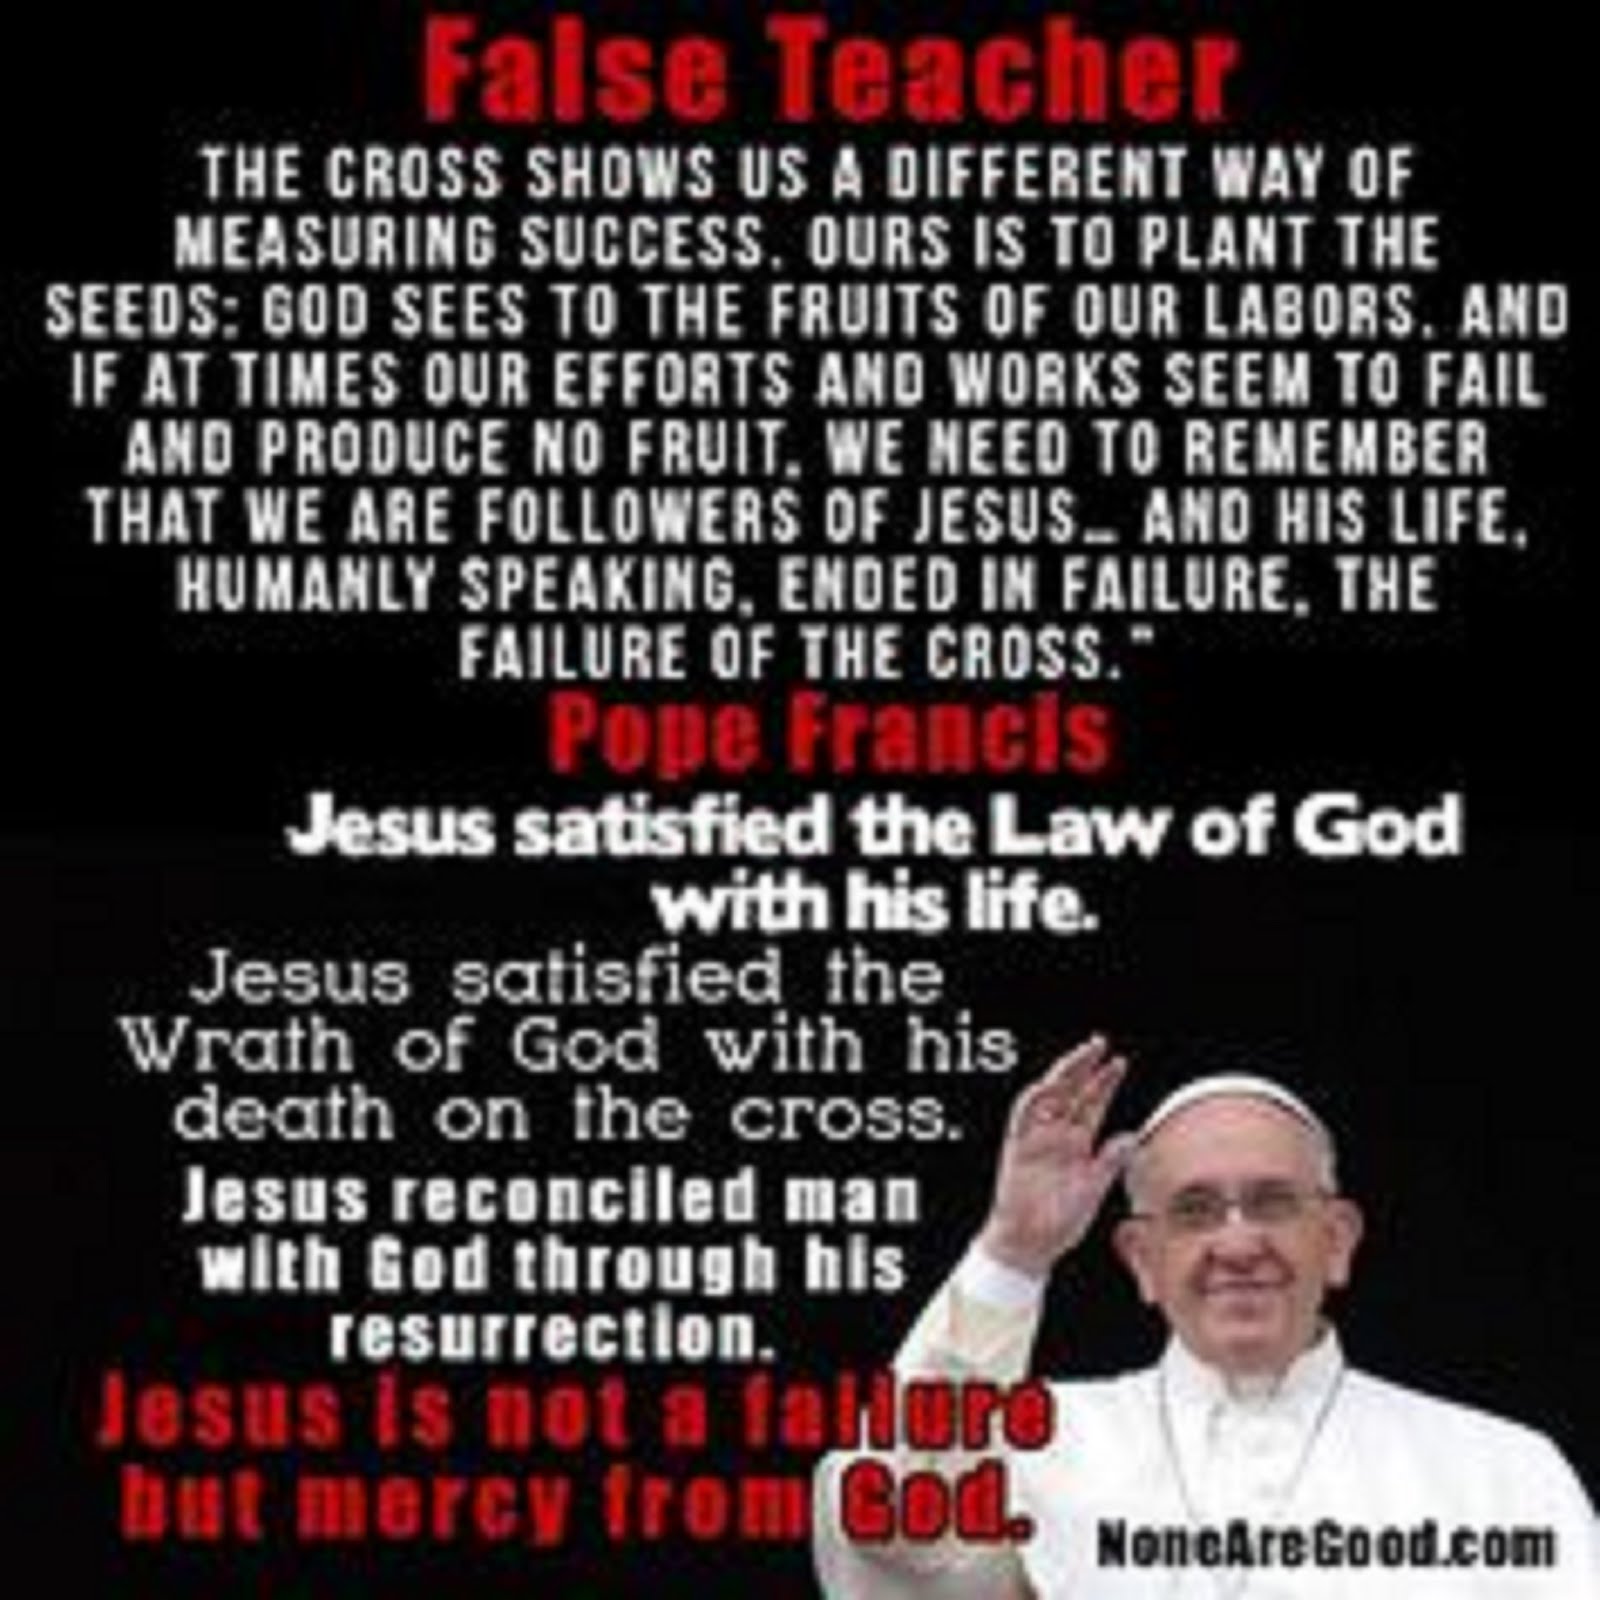 THE FALSE PROPHET - POPE FRANCIS GIVES A FALSE  TESTIMONY ABOUT JESUS CHRIST